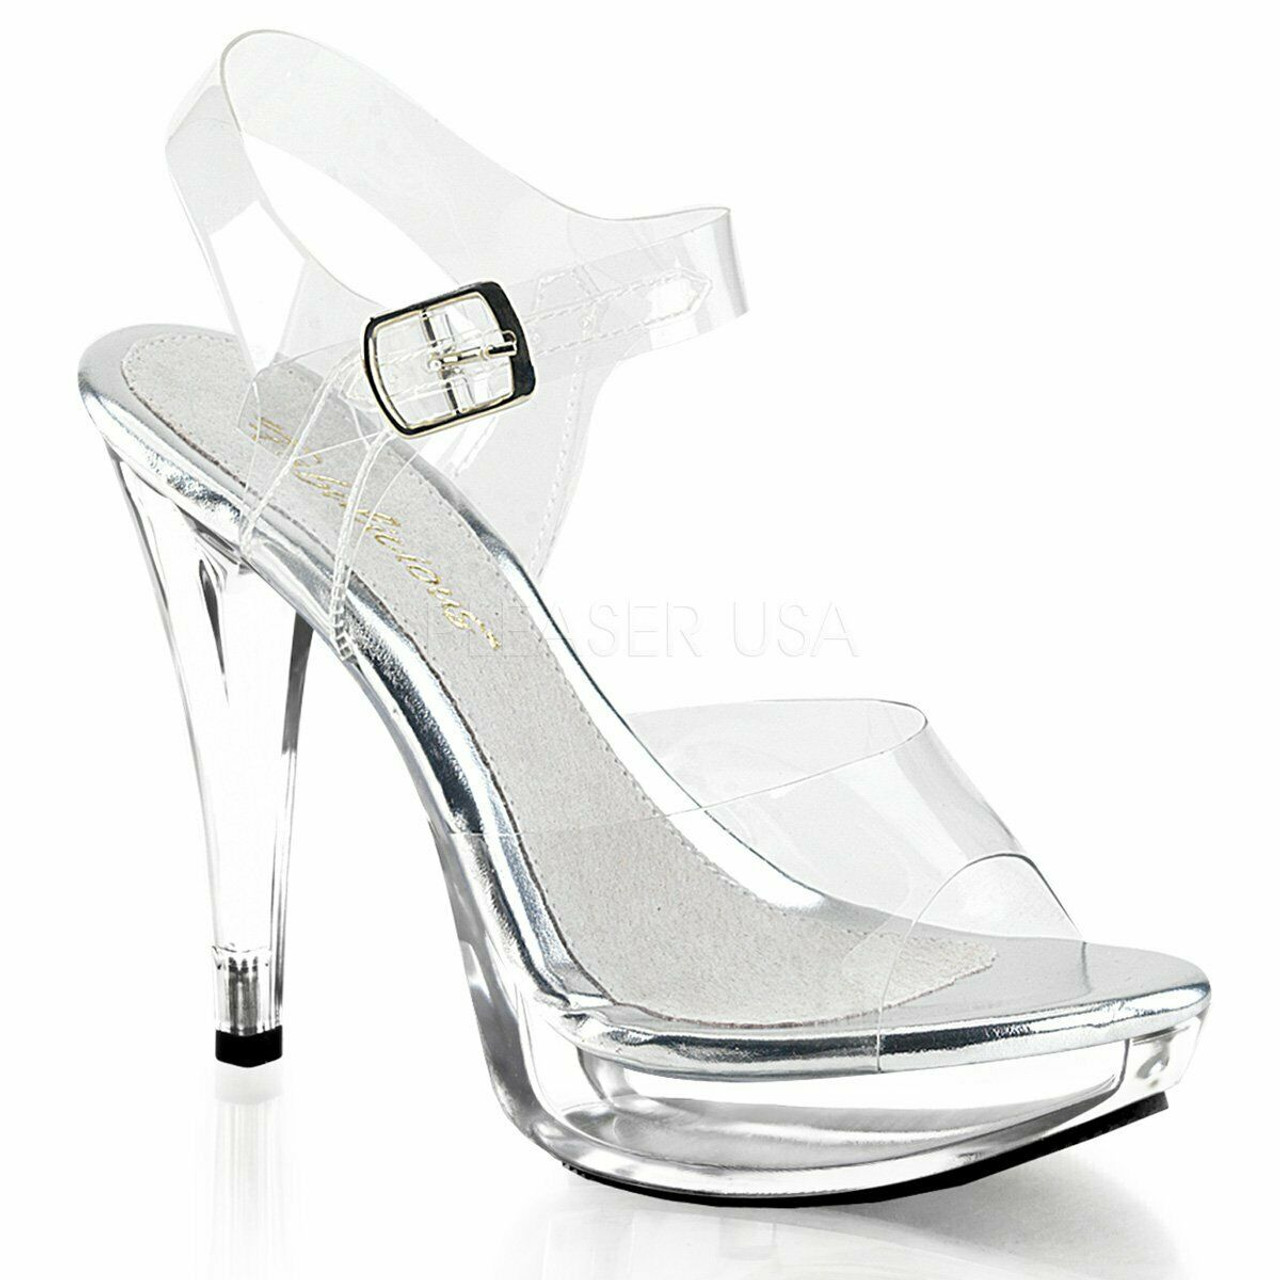 Pleaser exotic dancer heels with crystal detailing size 6 | Heels,  Crystals, Dancer